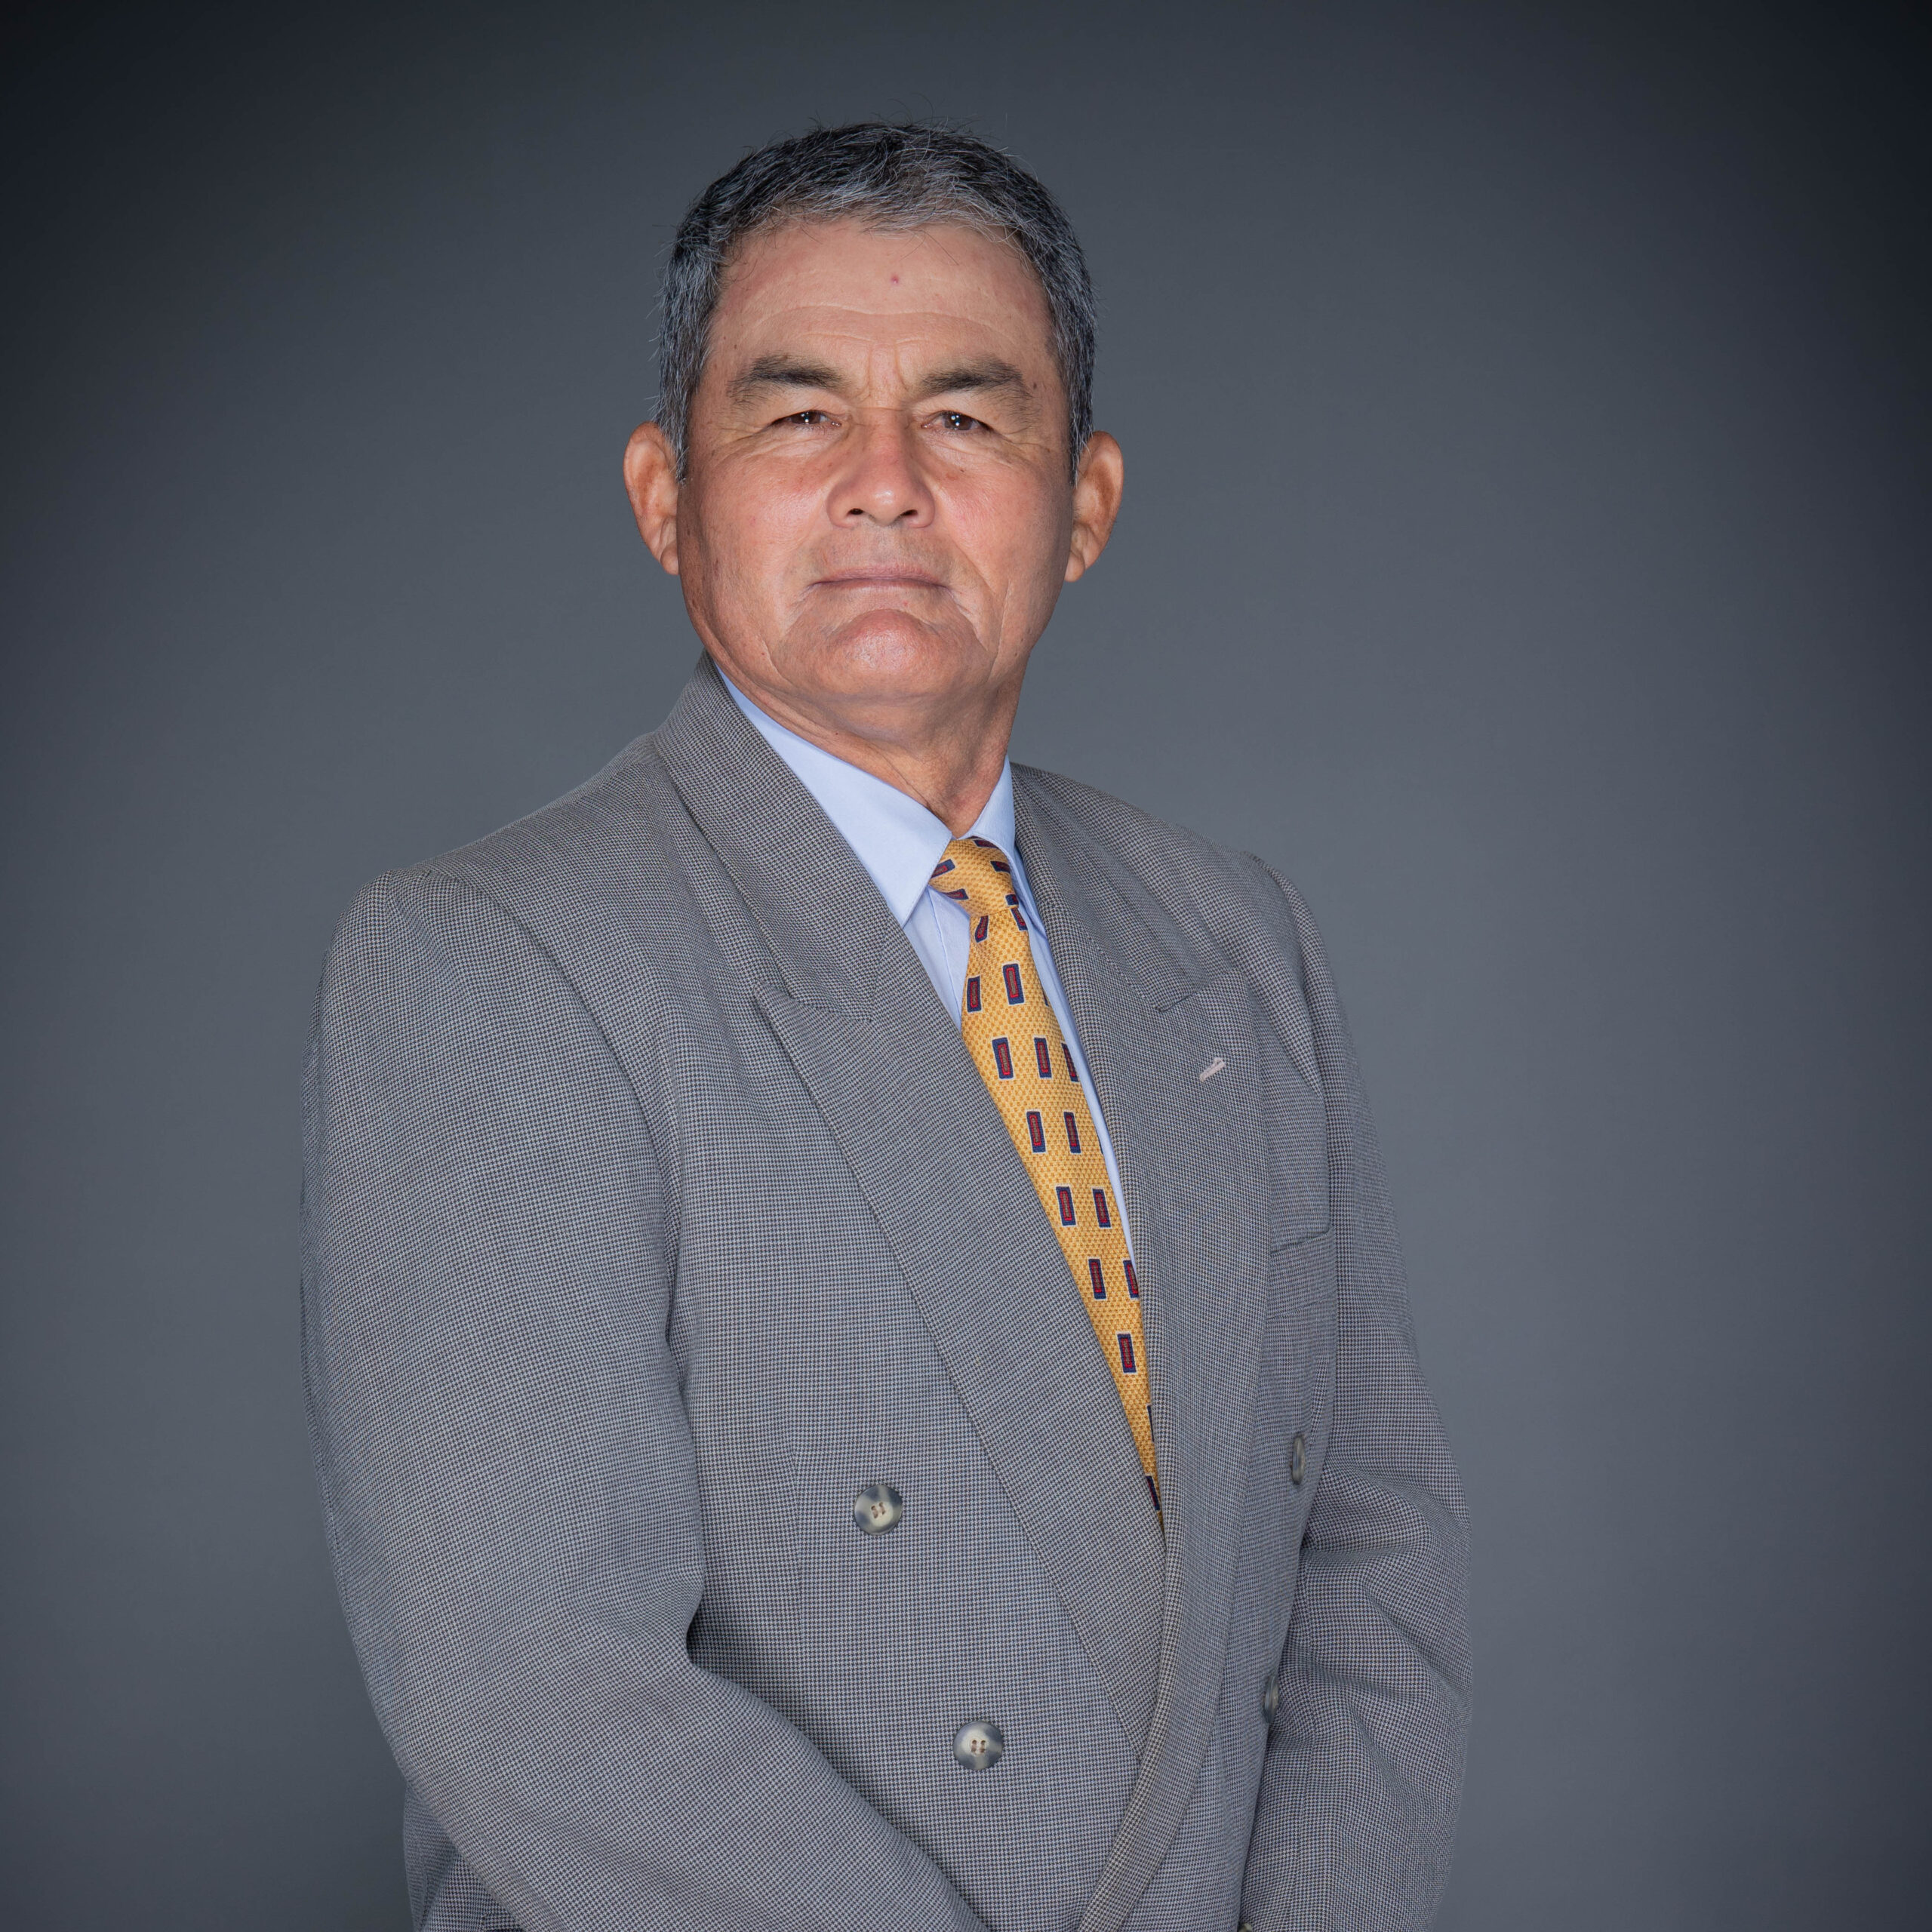 Carlos Alvarez Rojas